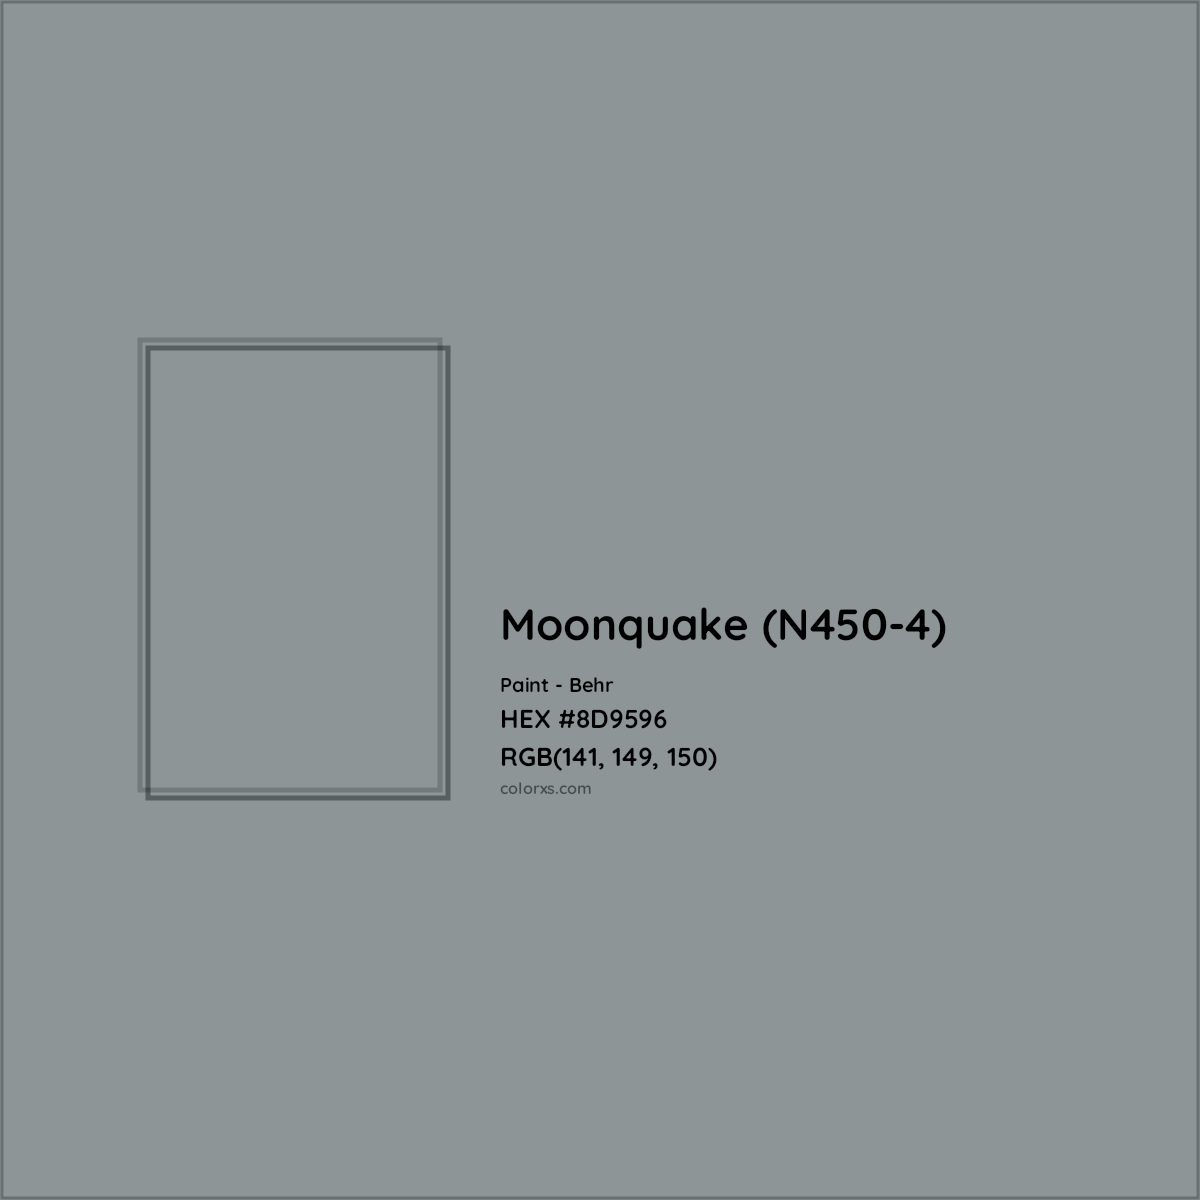 HEX #8D9596 Moonquake (N450-4) Paint Behr - Color Code